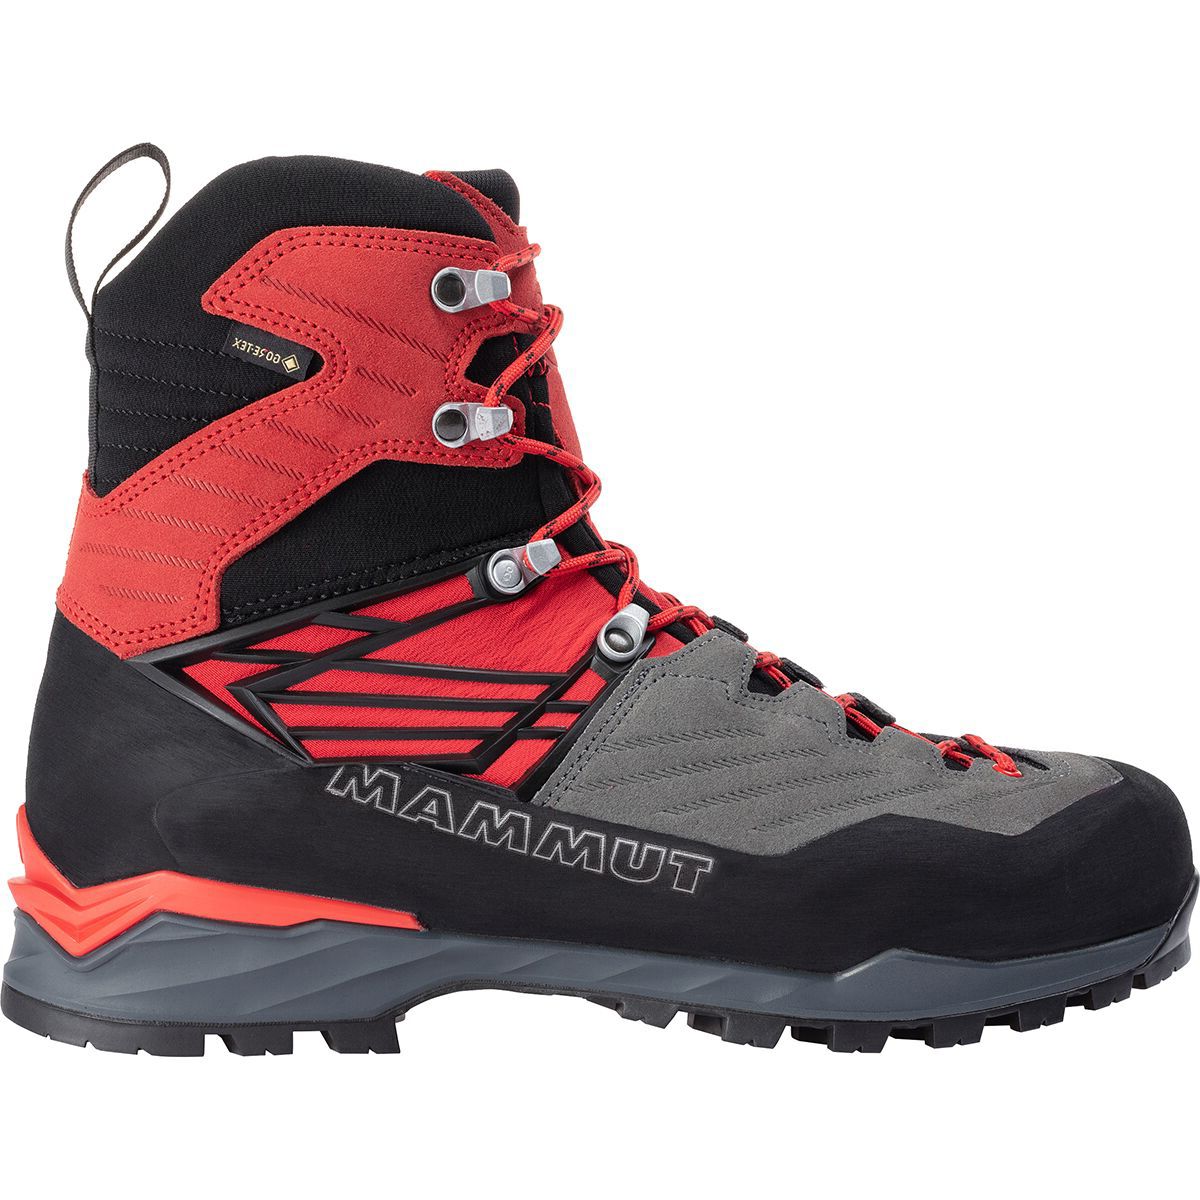 Kento Pro High GTX Mountaineering Boot - Men